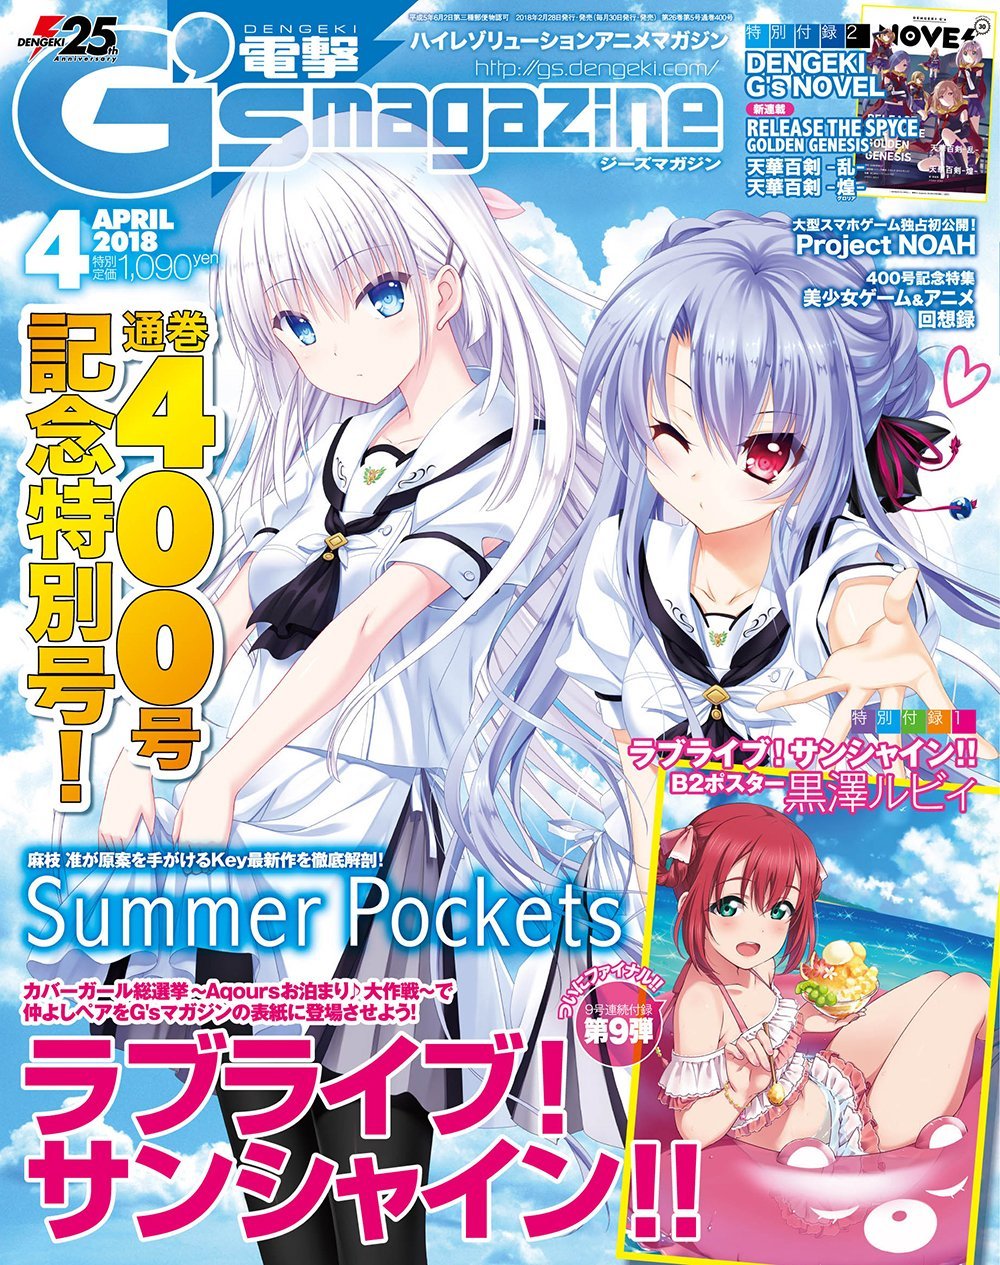 Dengeki G's Magazine Issue 249 (April 2018) (print edition)